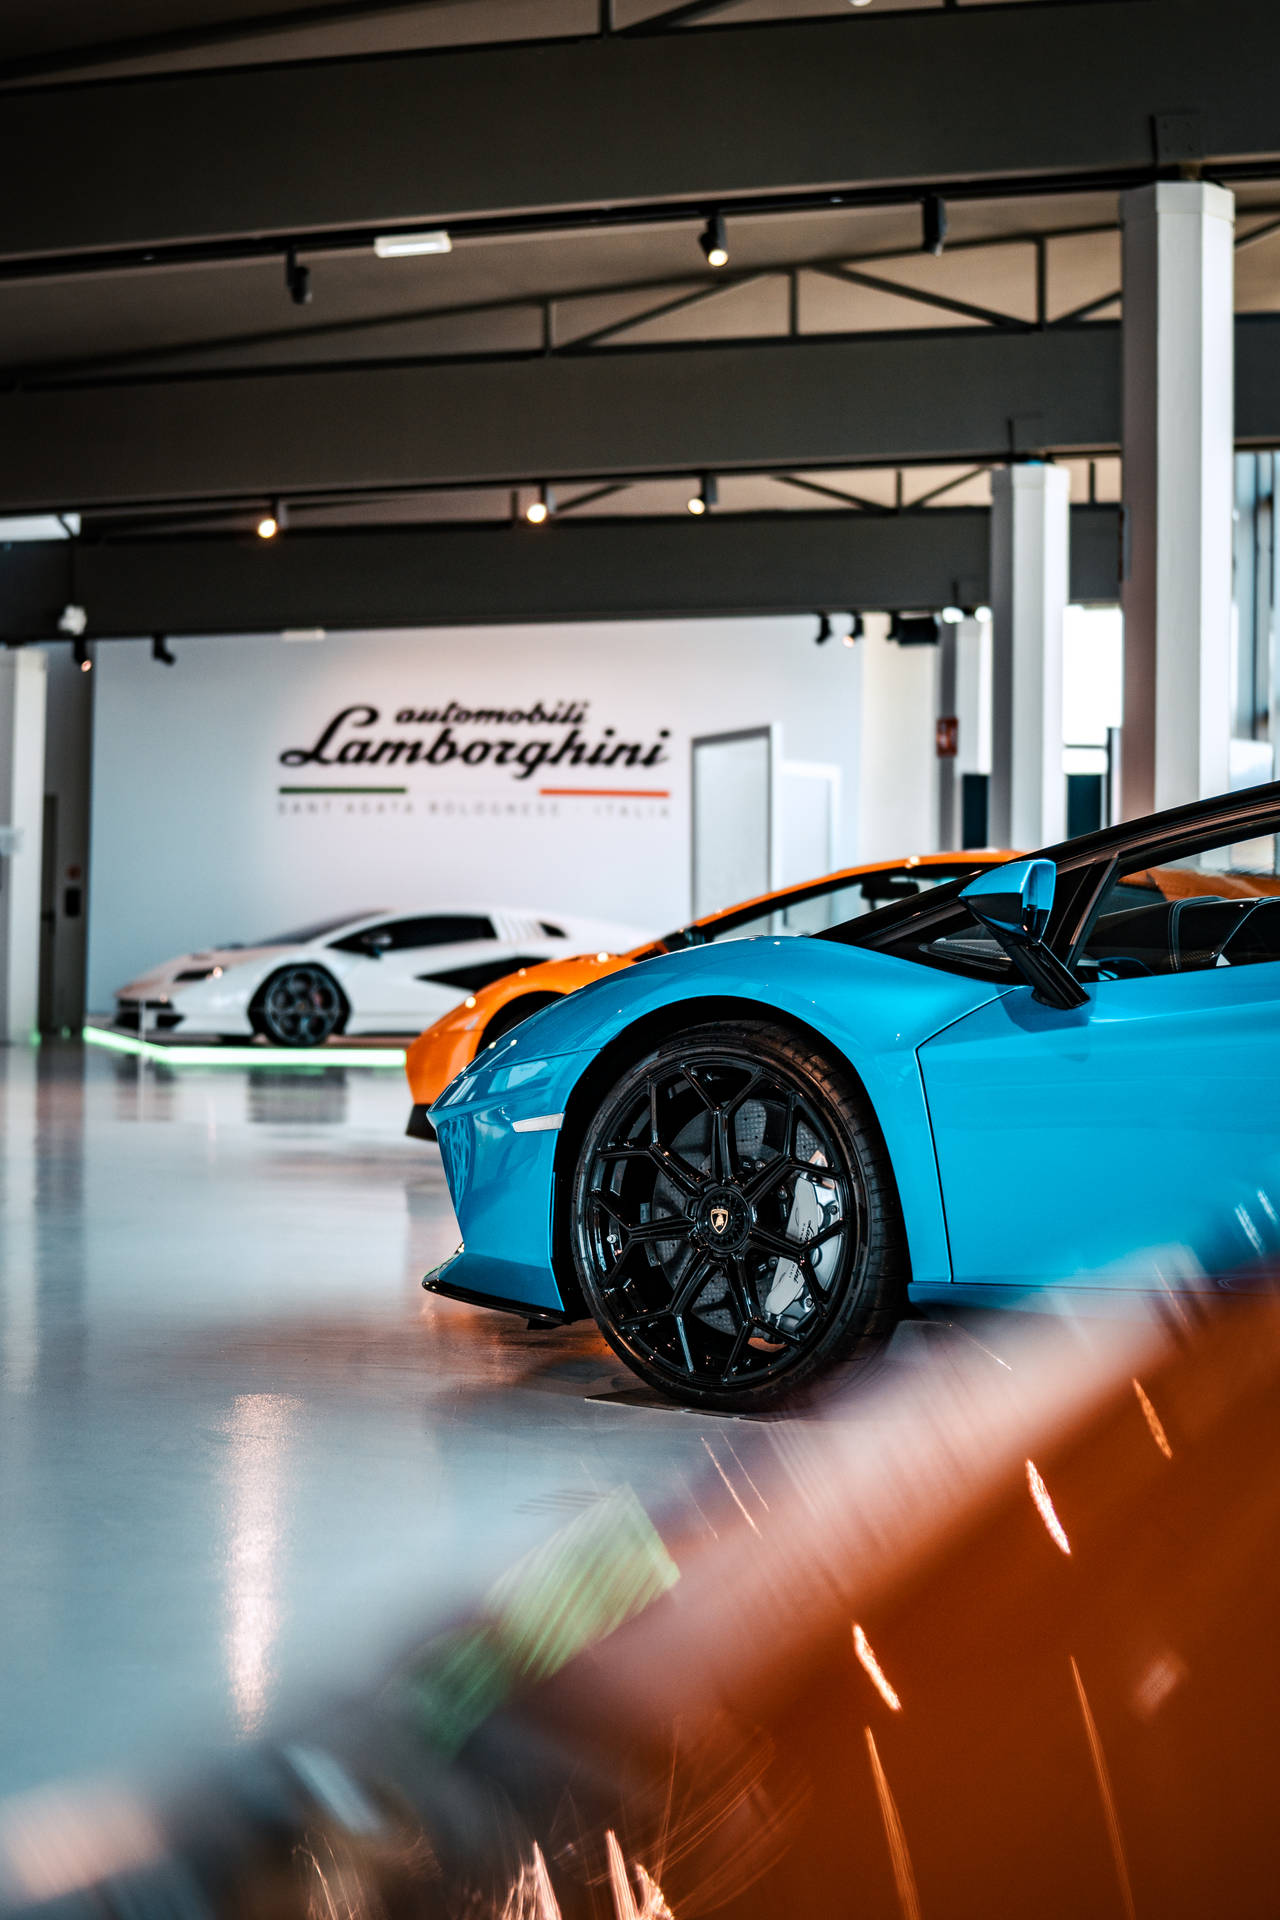 4k Lamborghini Show Room Background